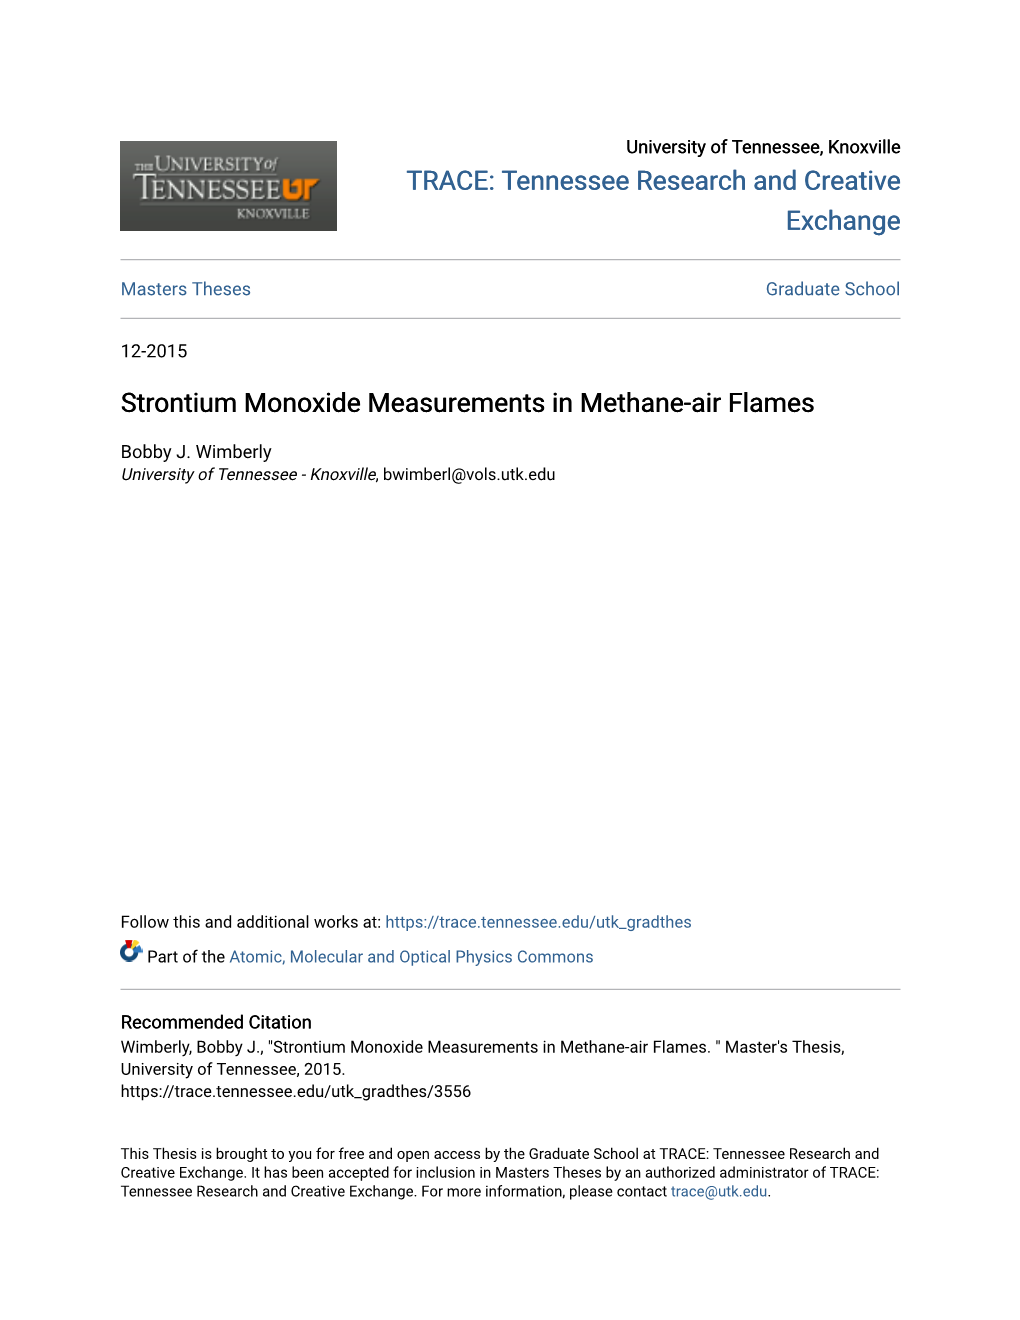 Strontium Monoxide Measurements in Methane-Air Flames